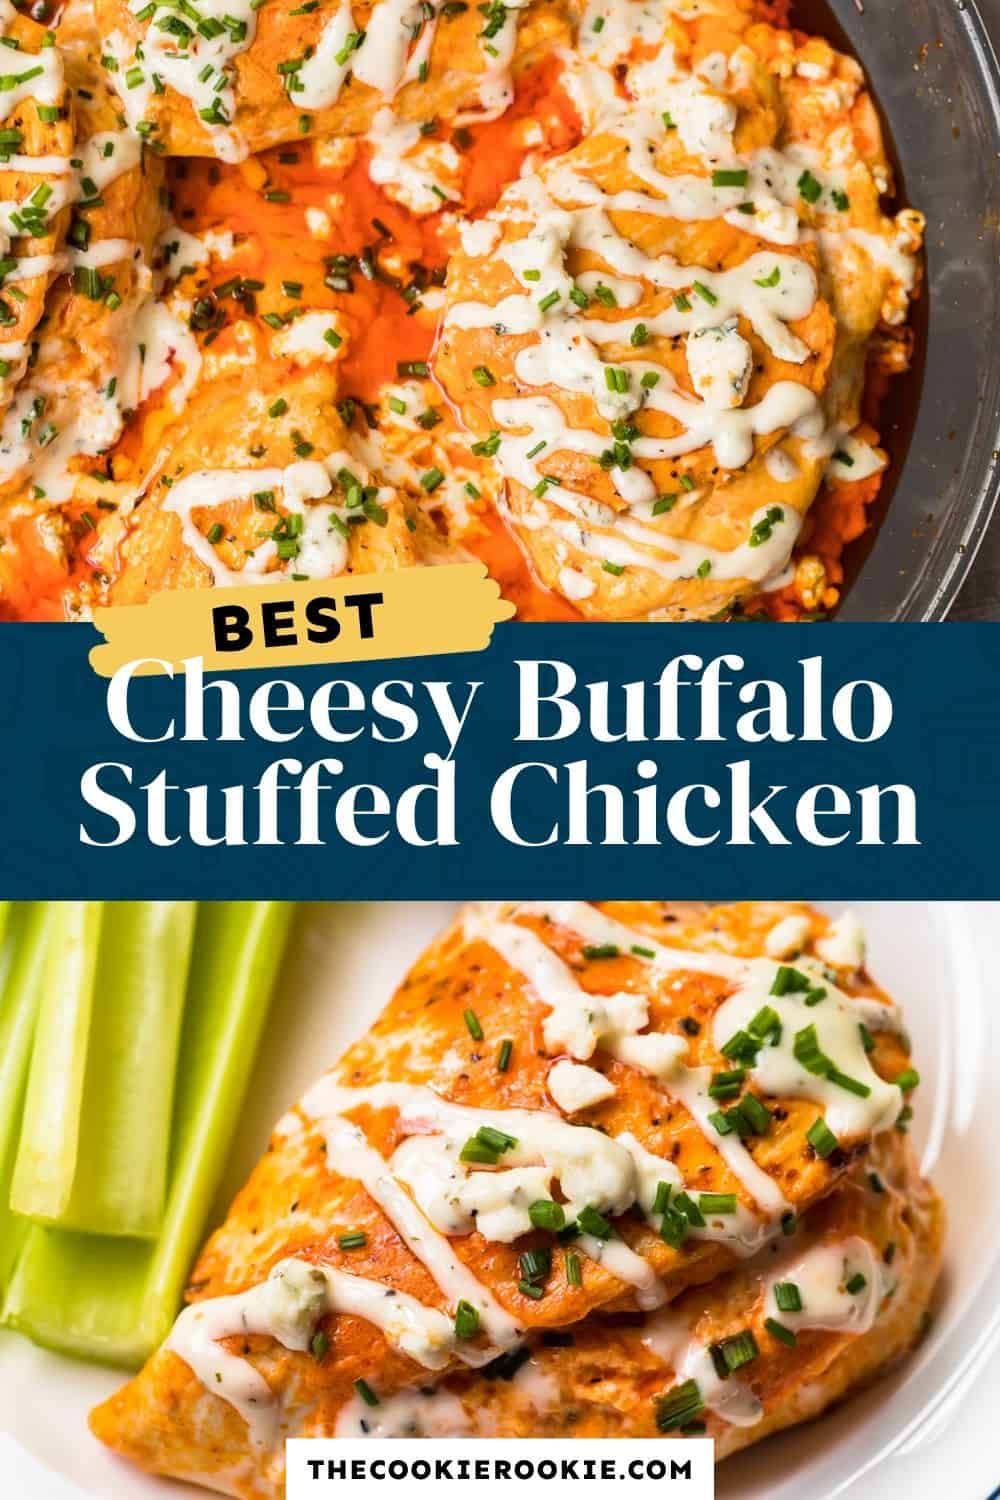 Stuffed Buffalo Chicken Recipe - The Cookie Rookie®